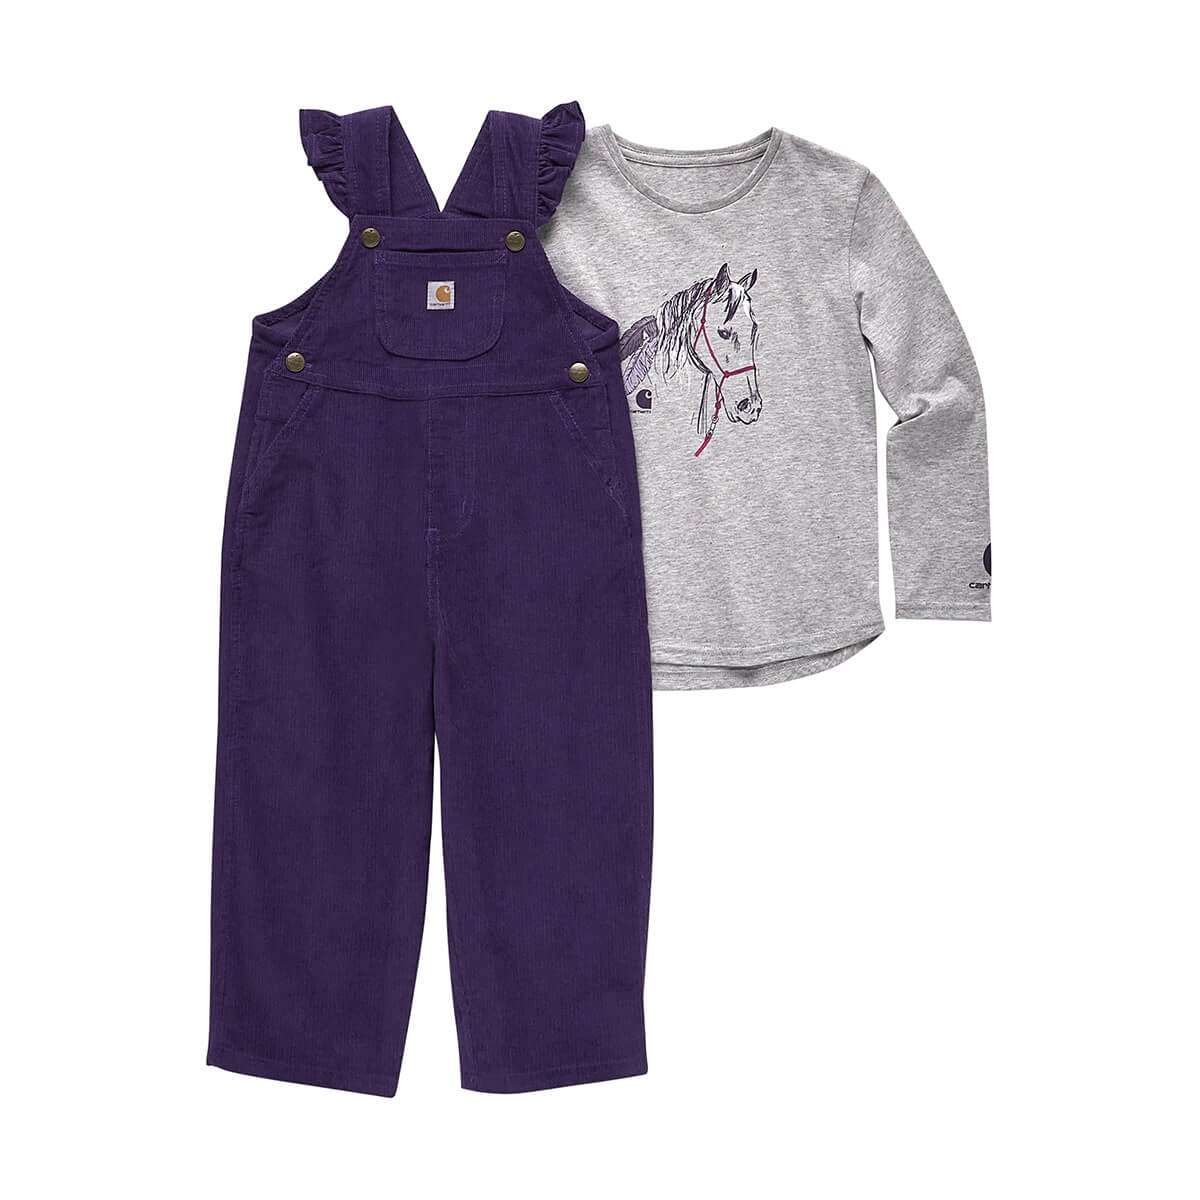 Carhartt Toddler's Long Sleeve T-Shirt & Corduroy Overall 2PC Set - Crown Jewel